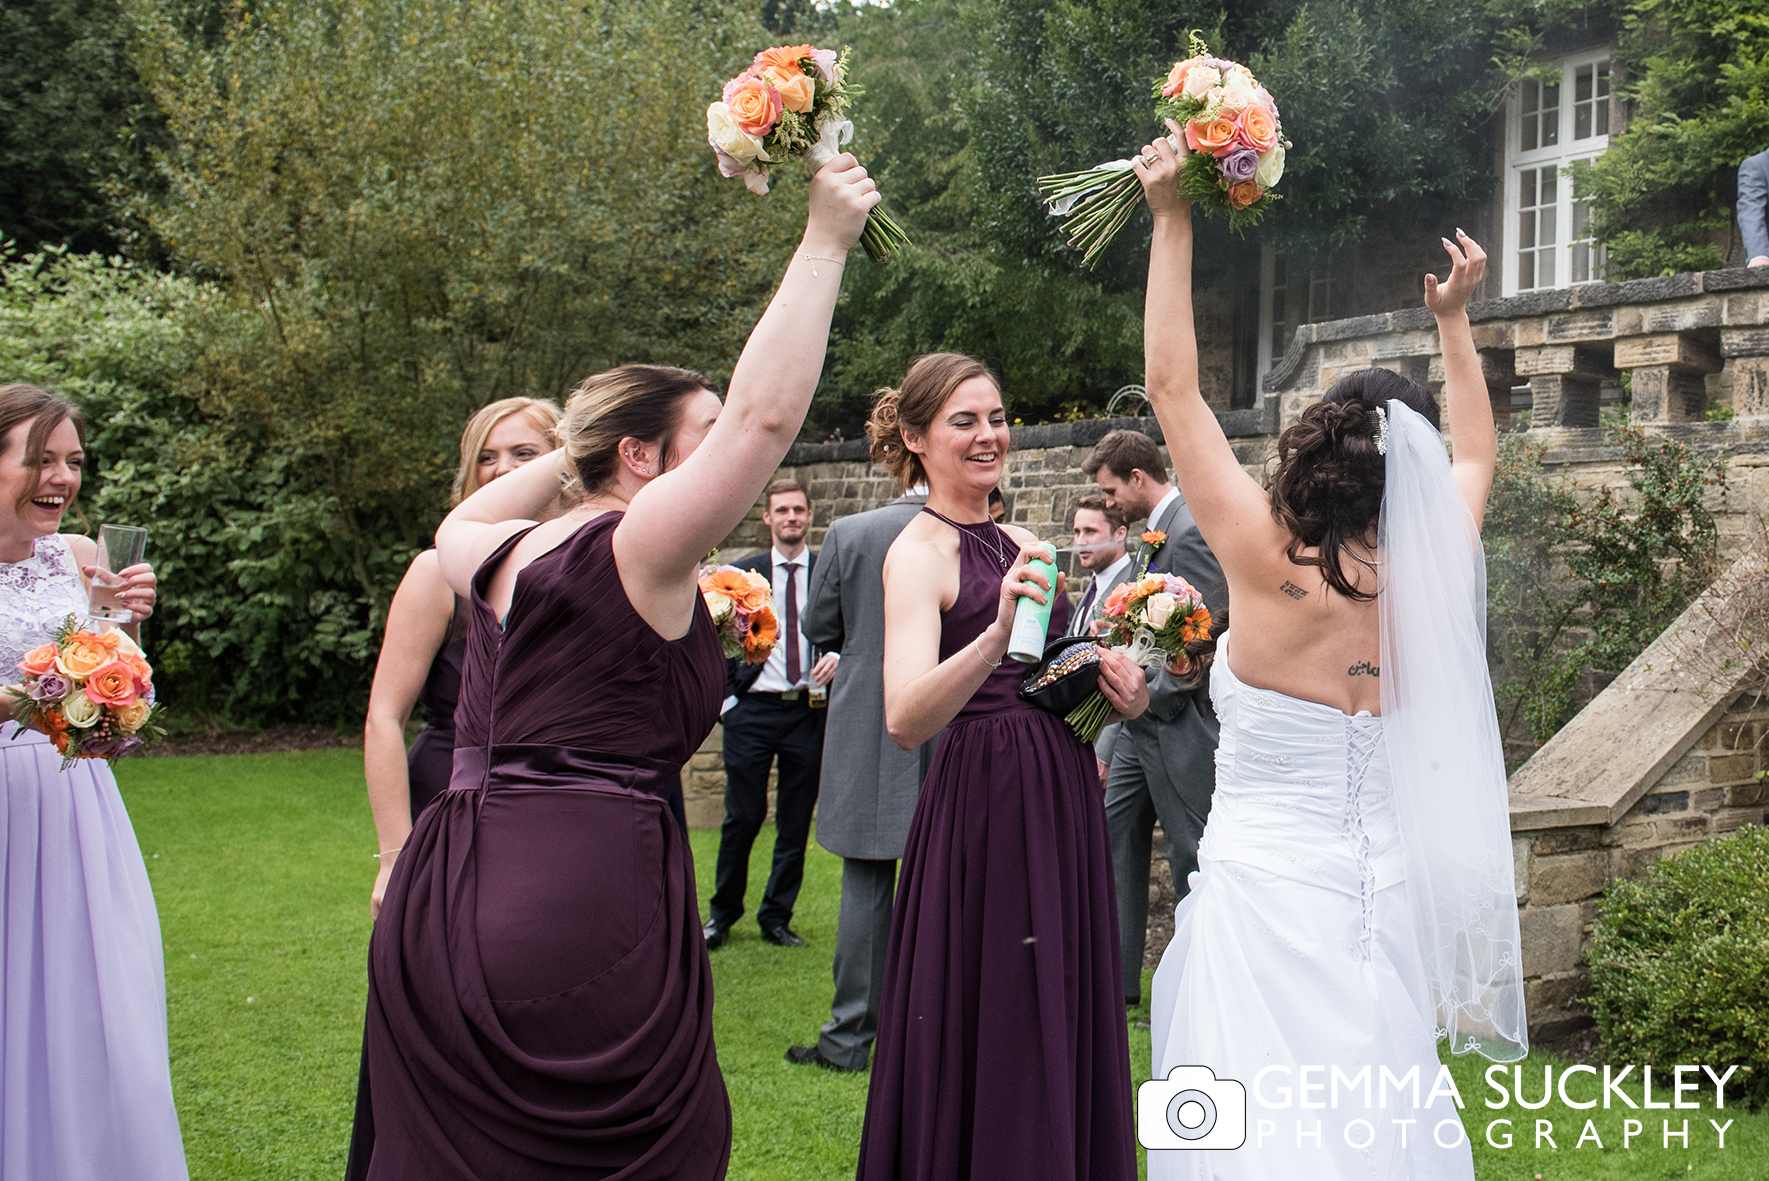 bride and bridesmaids at outdoor wedding spaying deodorant 